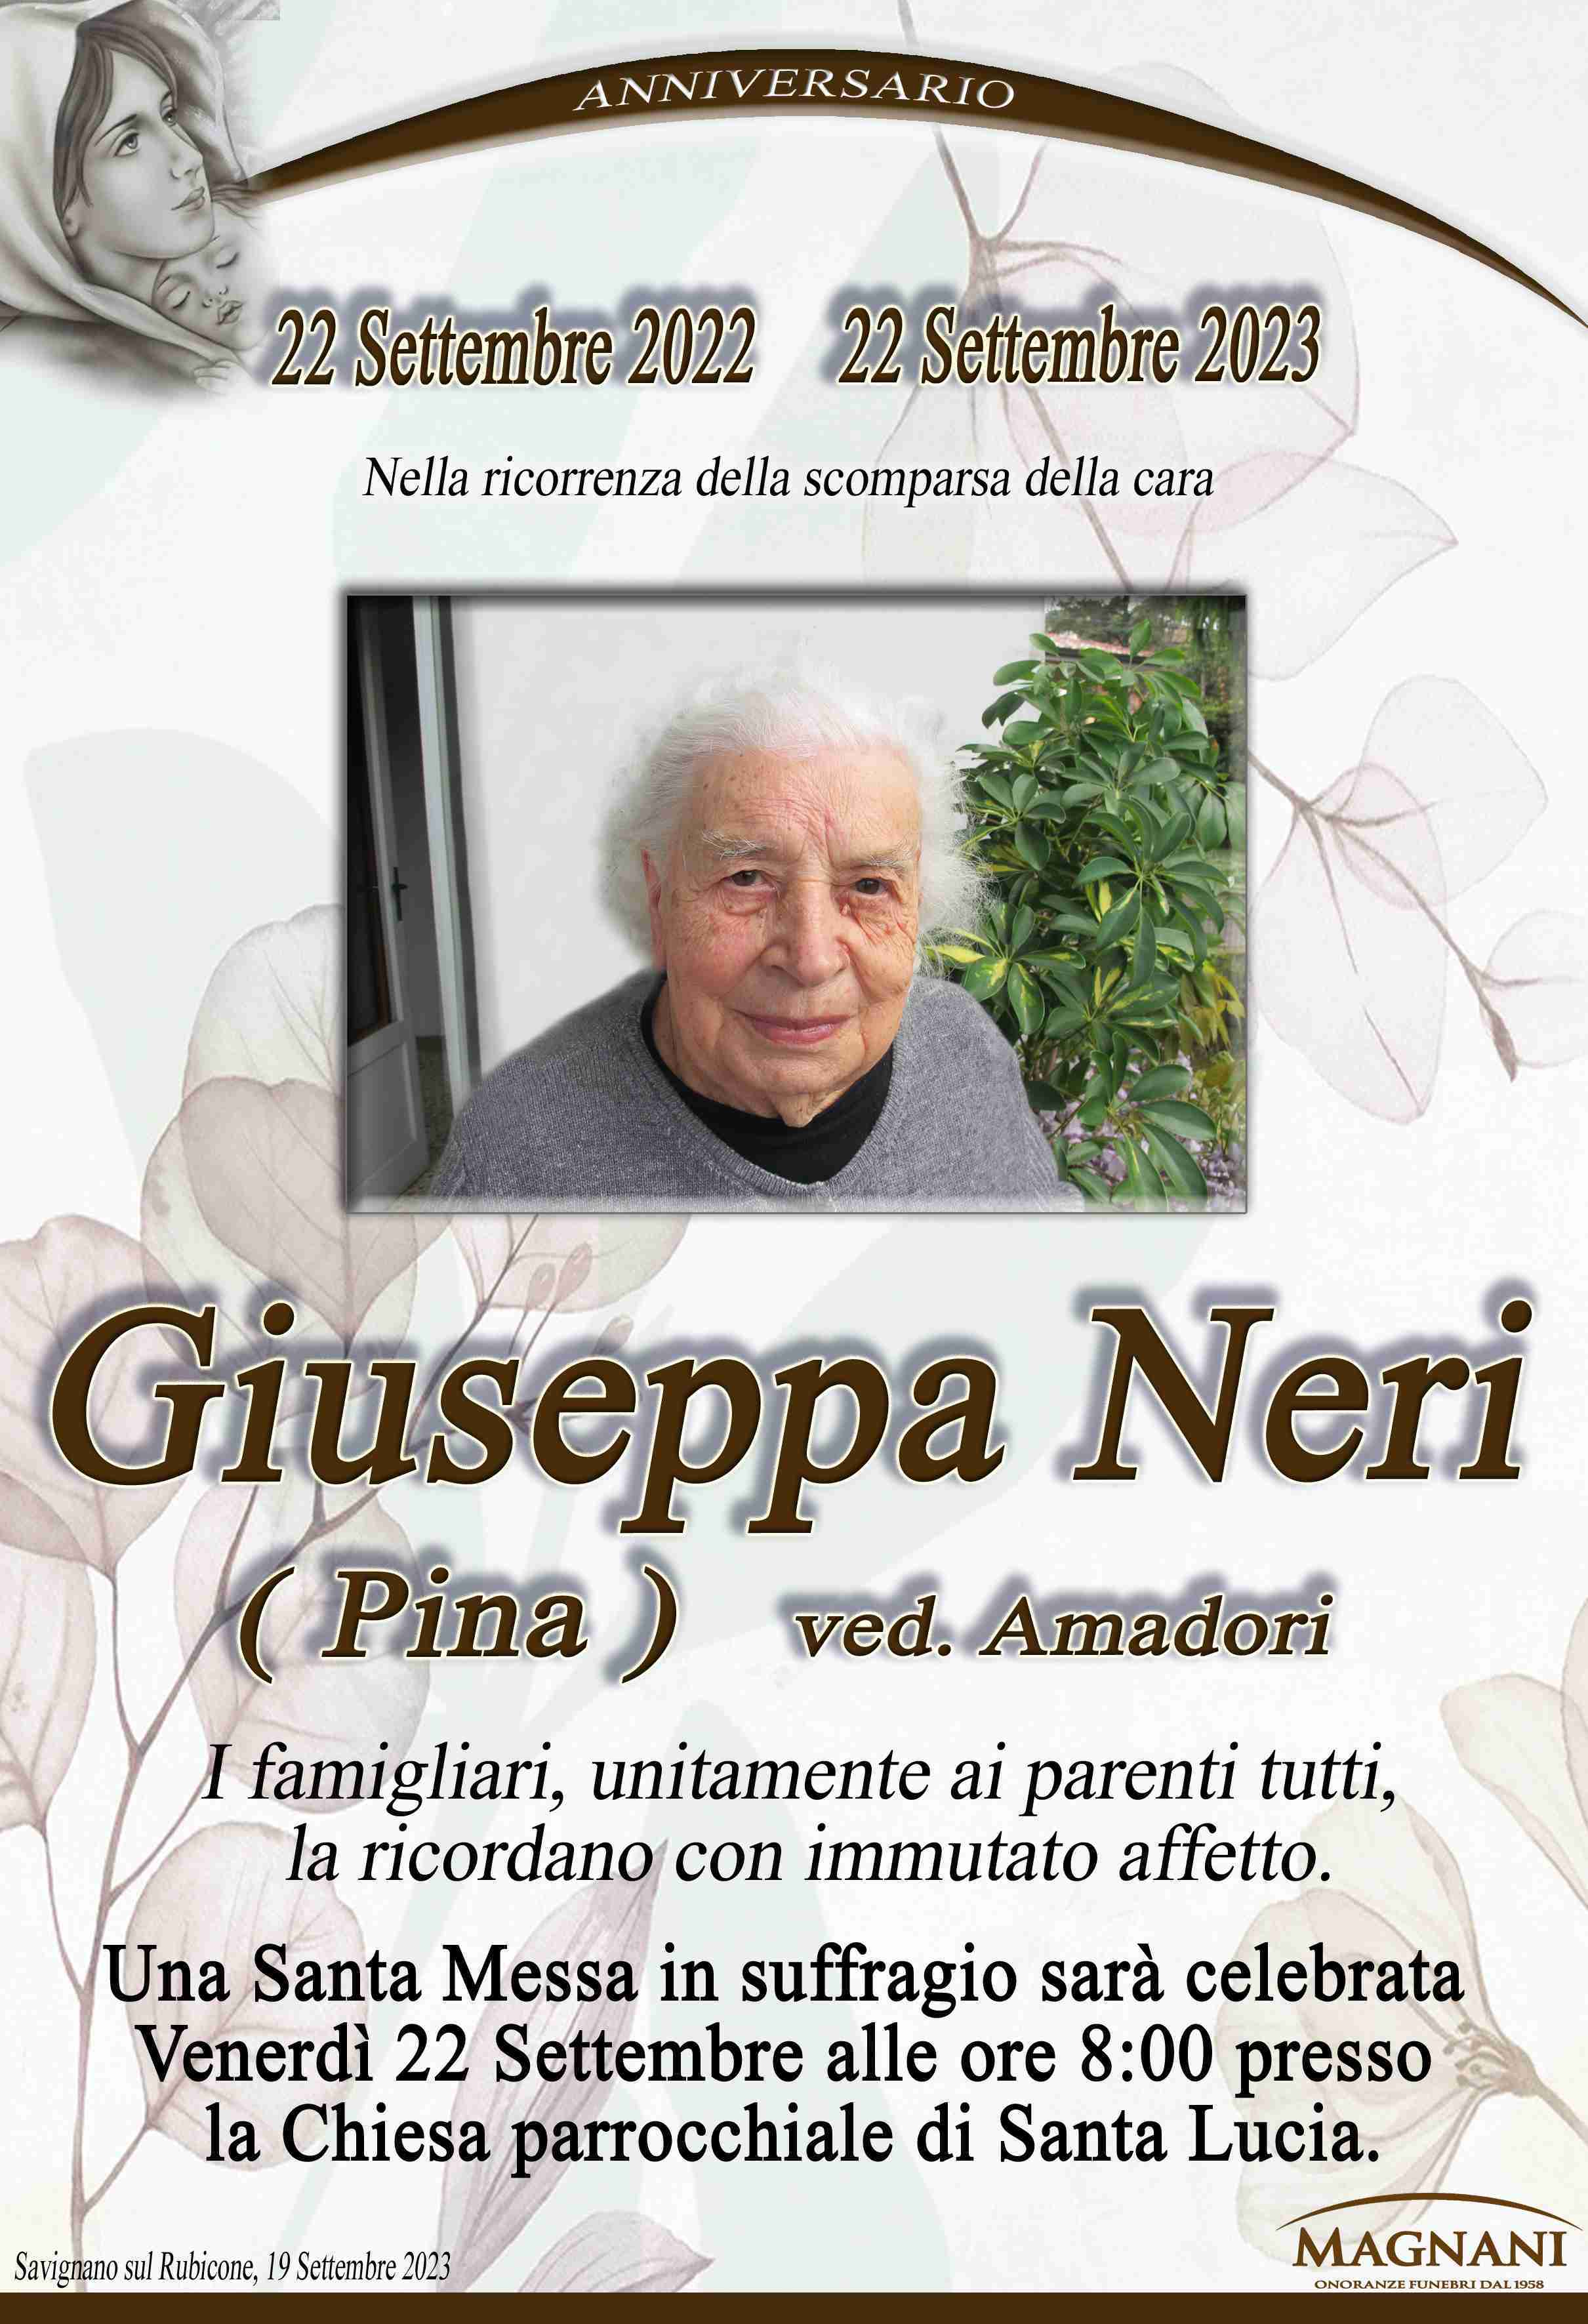 Giuseppa Neri